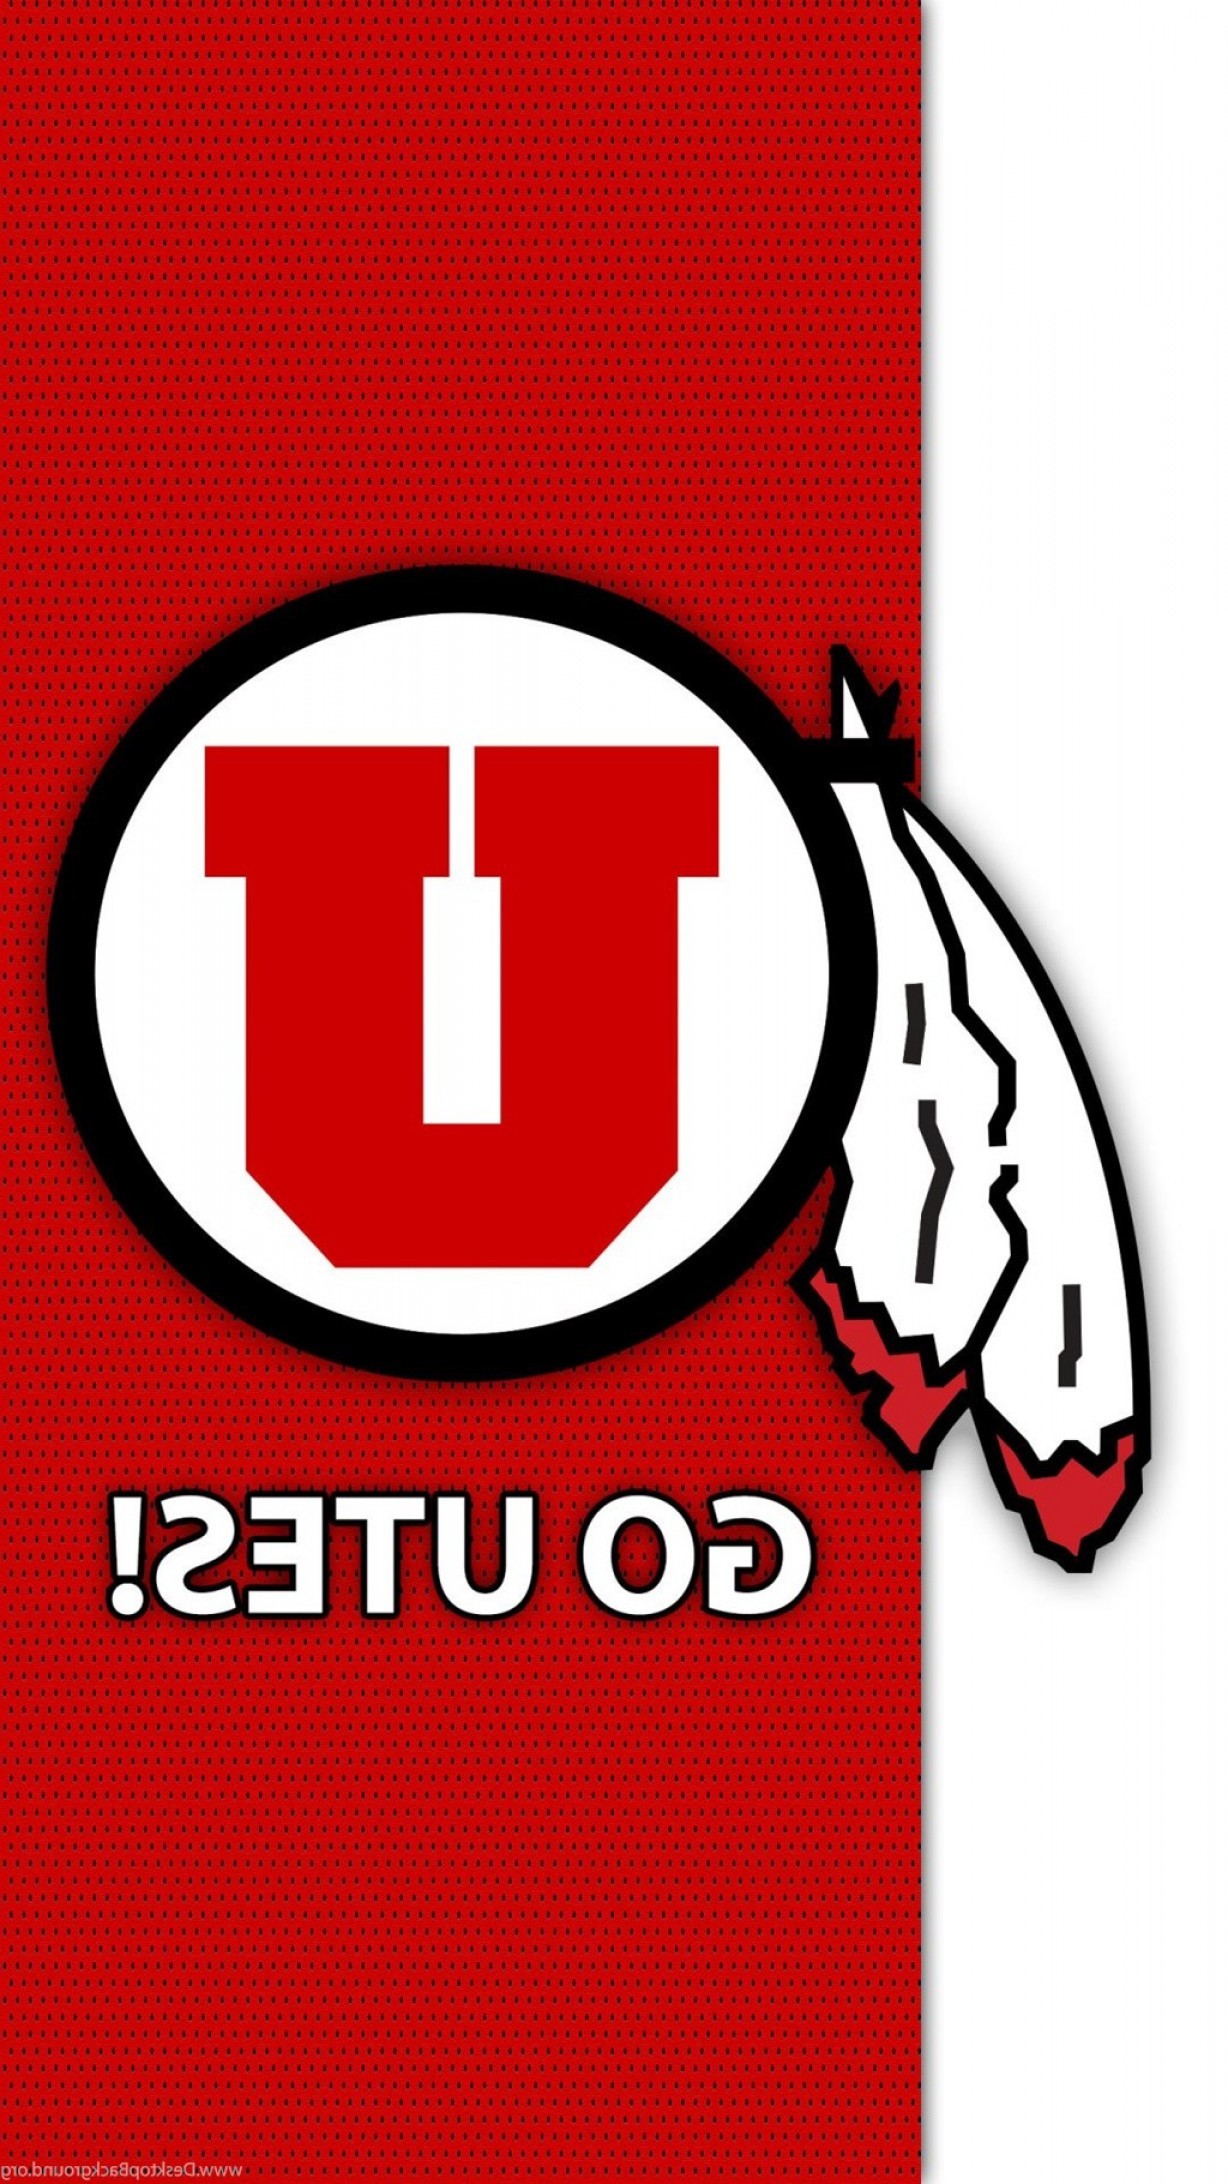 1228x2184 Utah Utes Logo Vector: Utah Utes A Cell Phone Wallpapers Based On The Logo